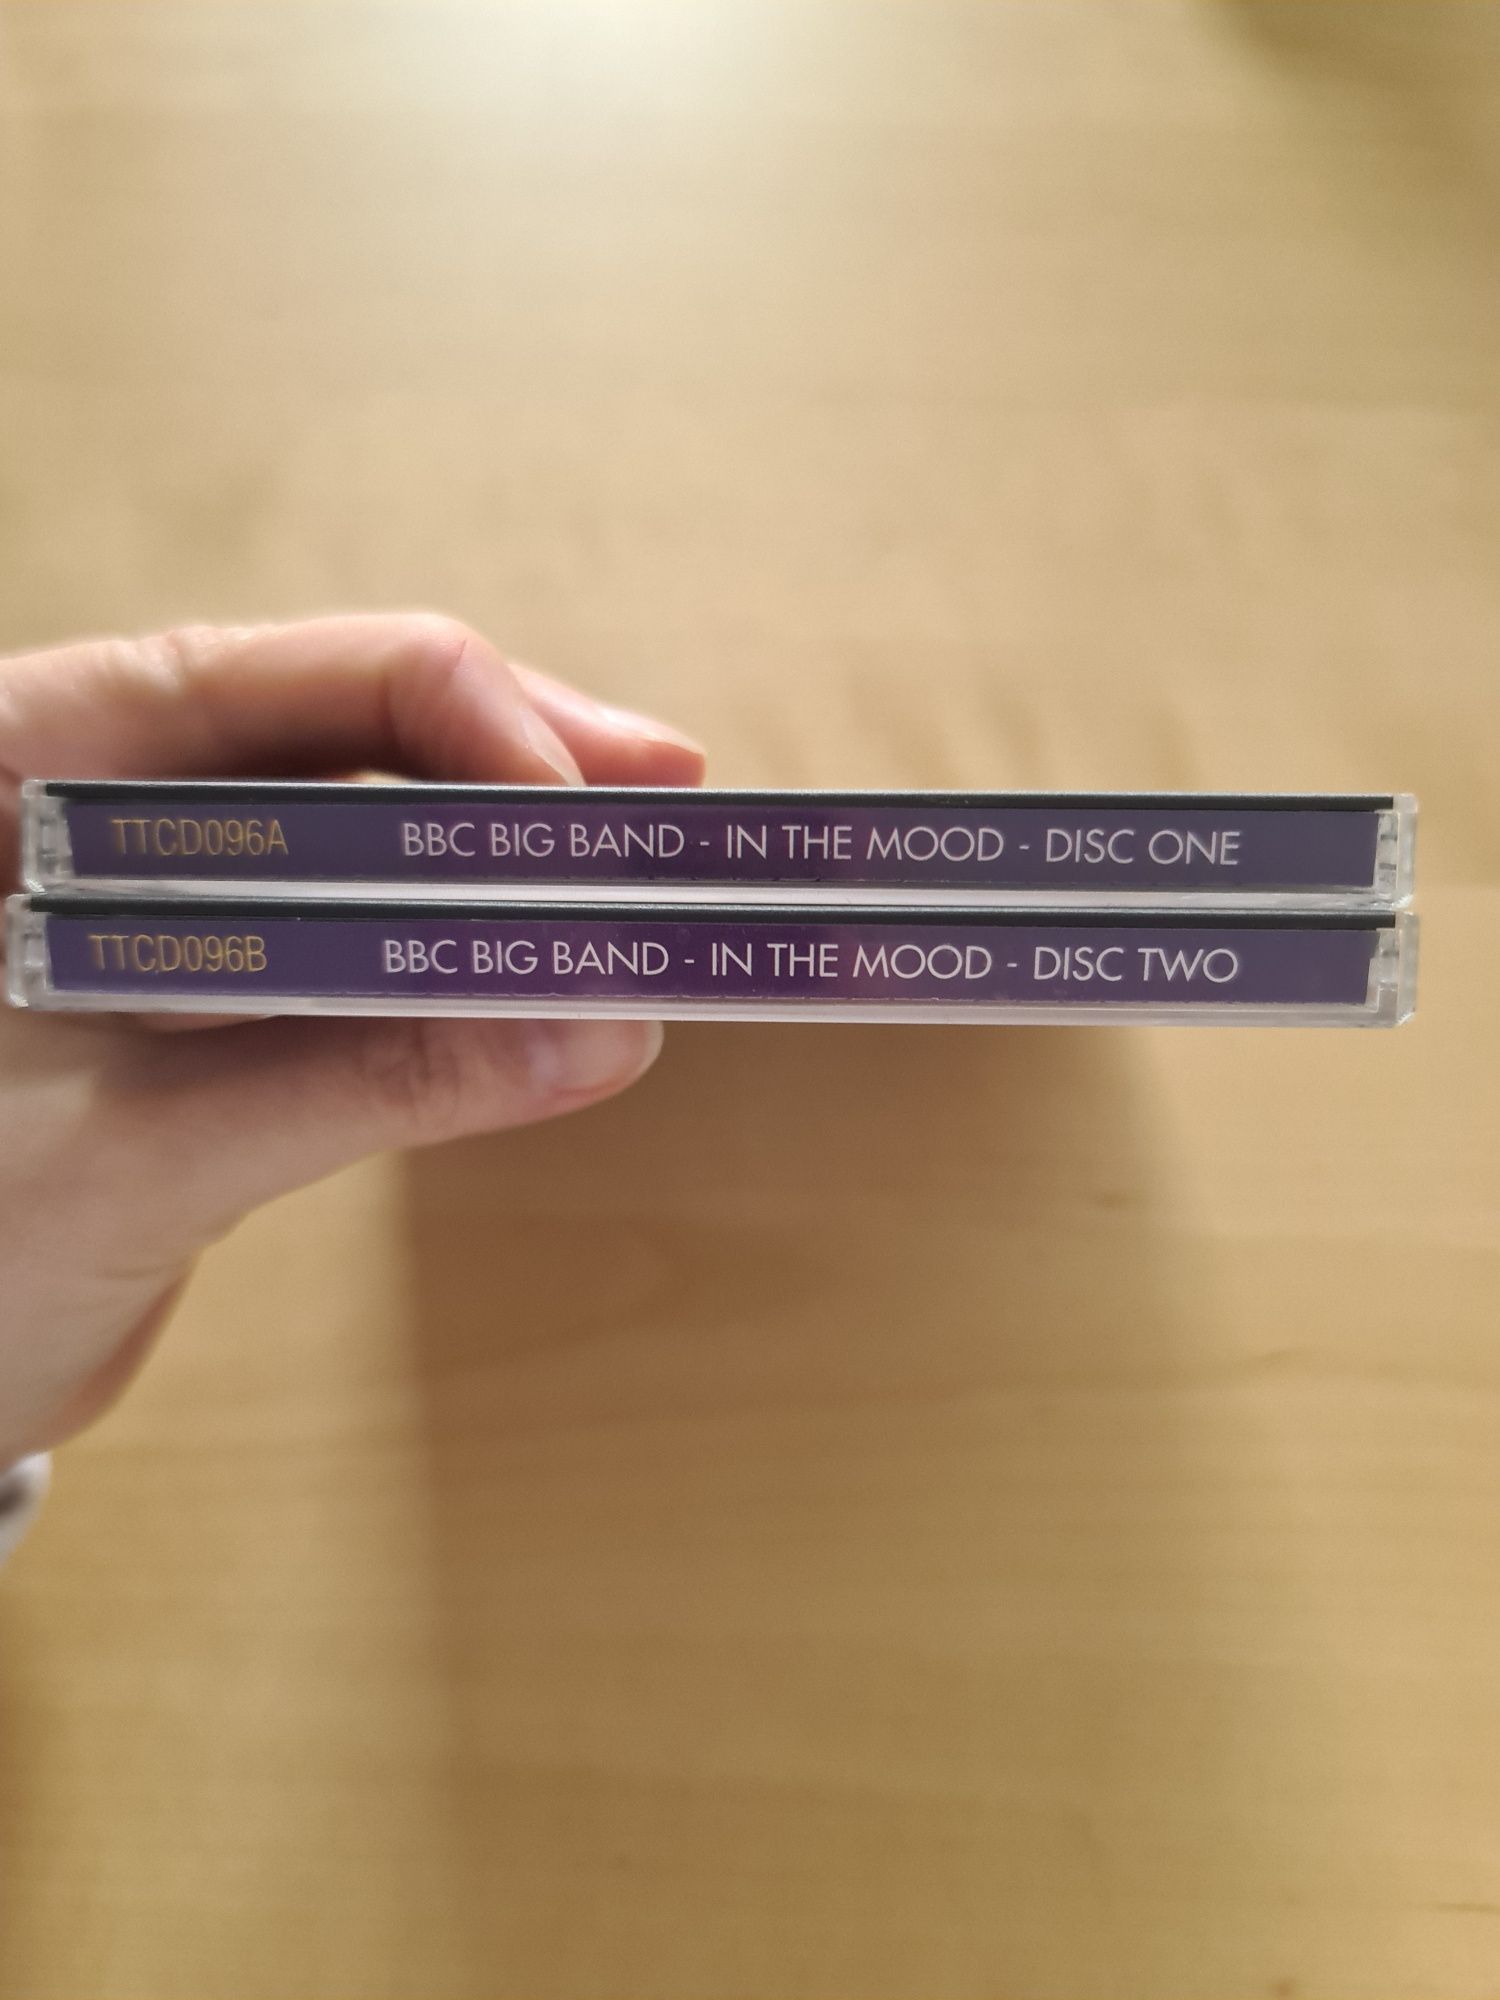 Zestaw 2 płyt CD BBC Big Band - In the Mood 2 płyty